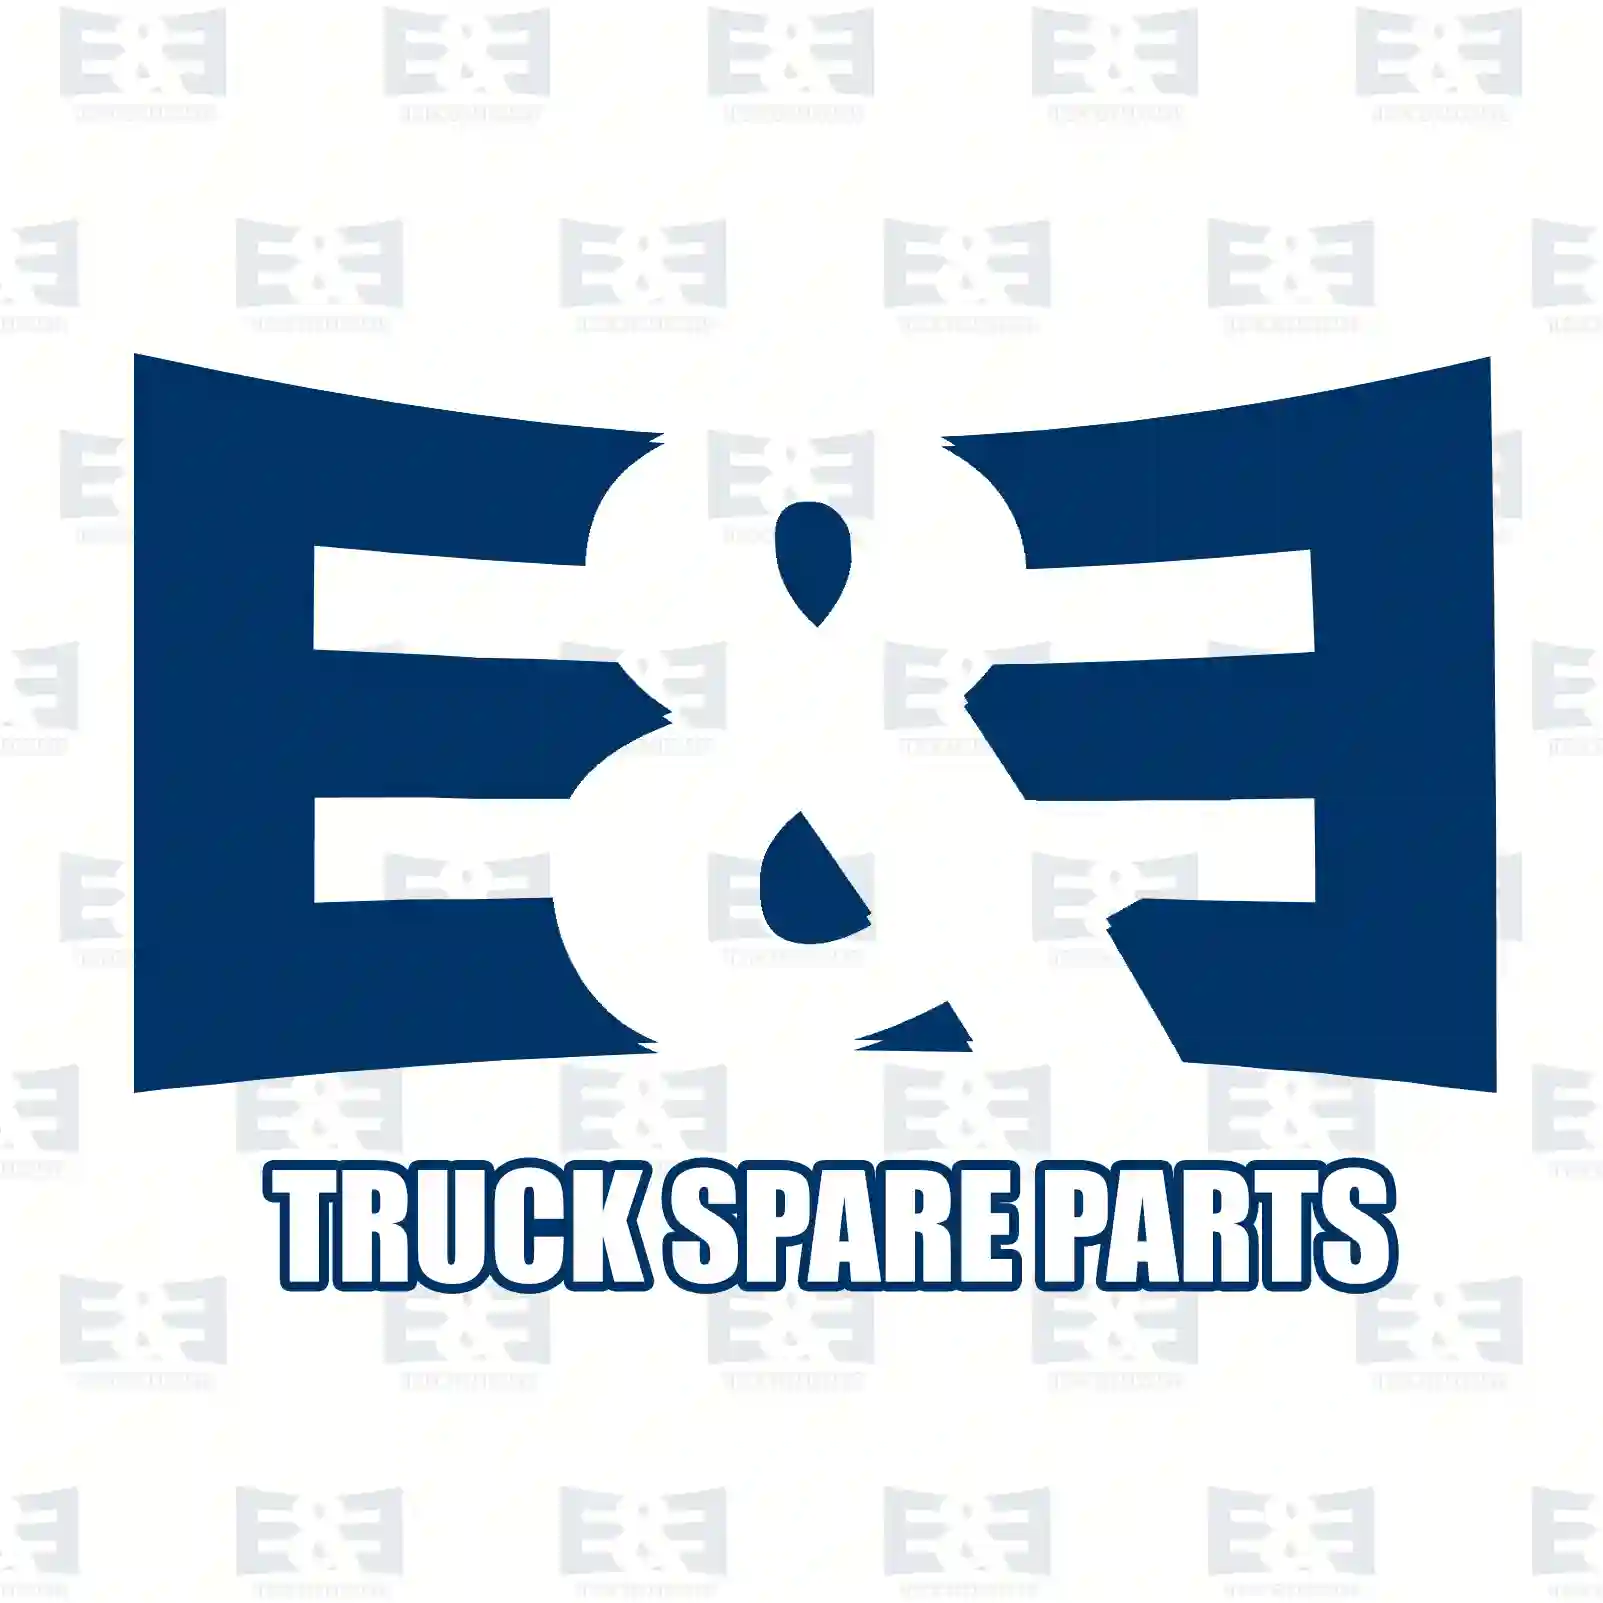 Compressor Compressor, EE No 2E2296749 ,  oem no:51541007114, 51541007227, 51541007248, 2V5100759 E&E Truck Spare Parts | Truck Spare Parts, Auotomotive Spare Parts